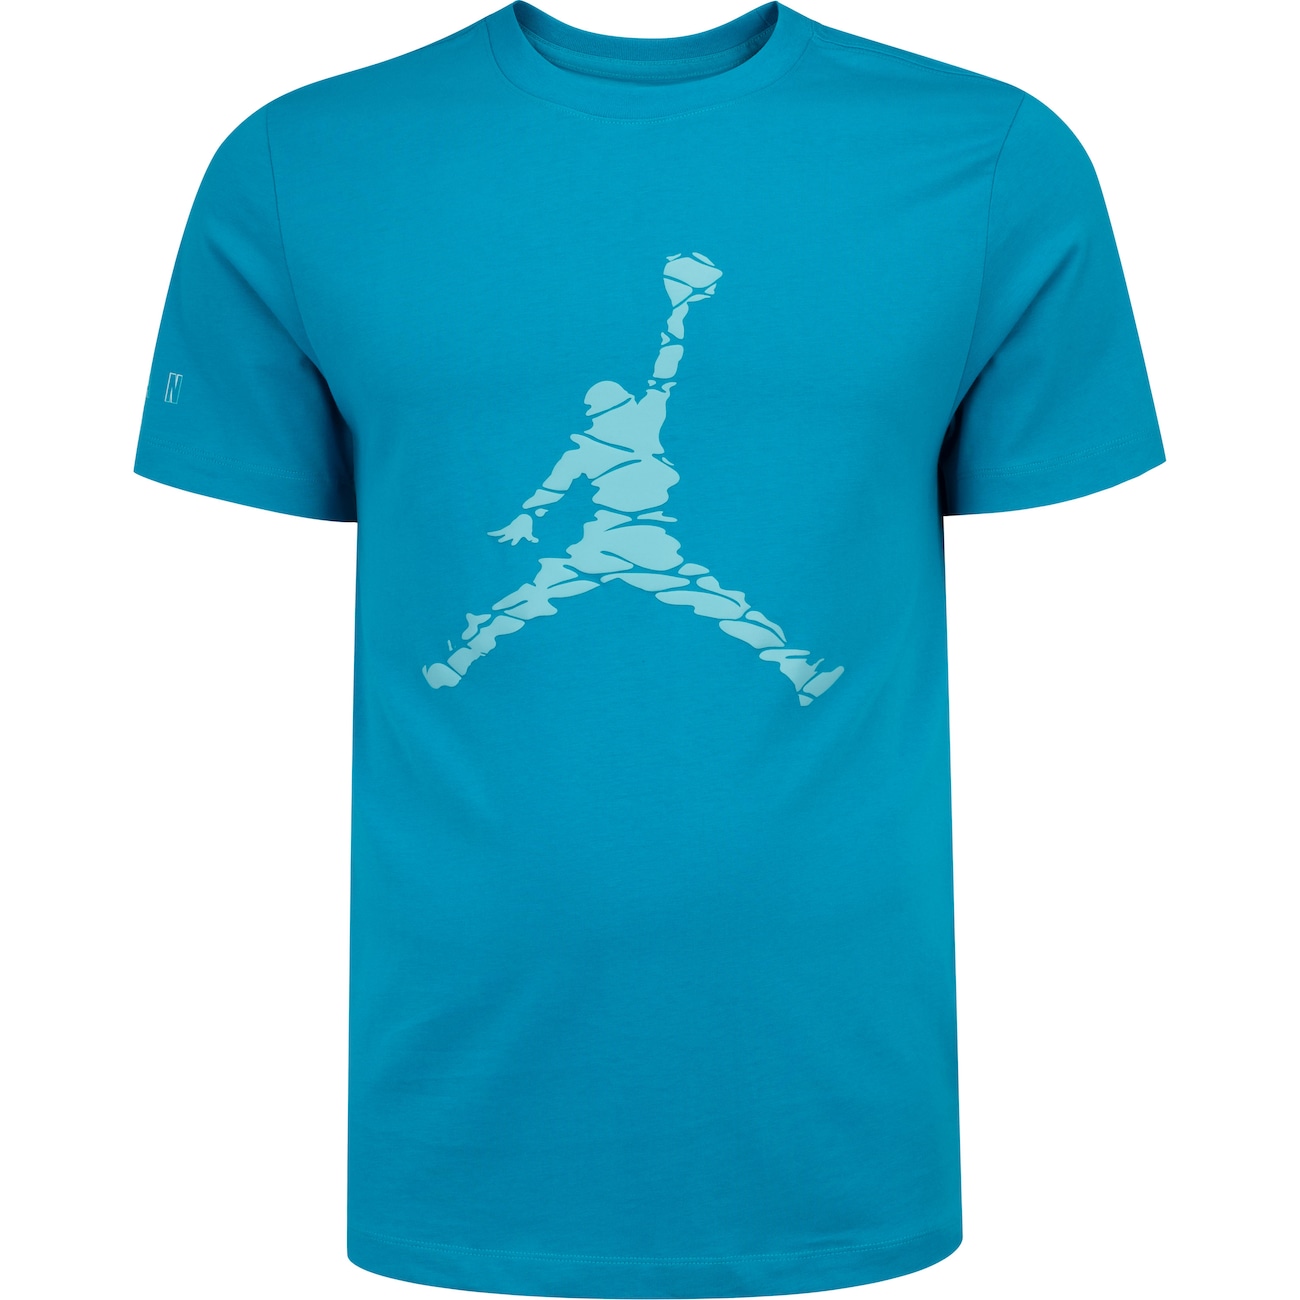 Camiseta Jordan Masculina Nike Essential Ss Crew 3